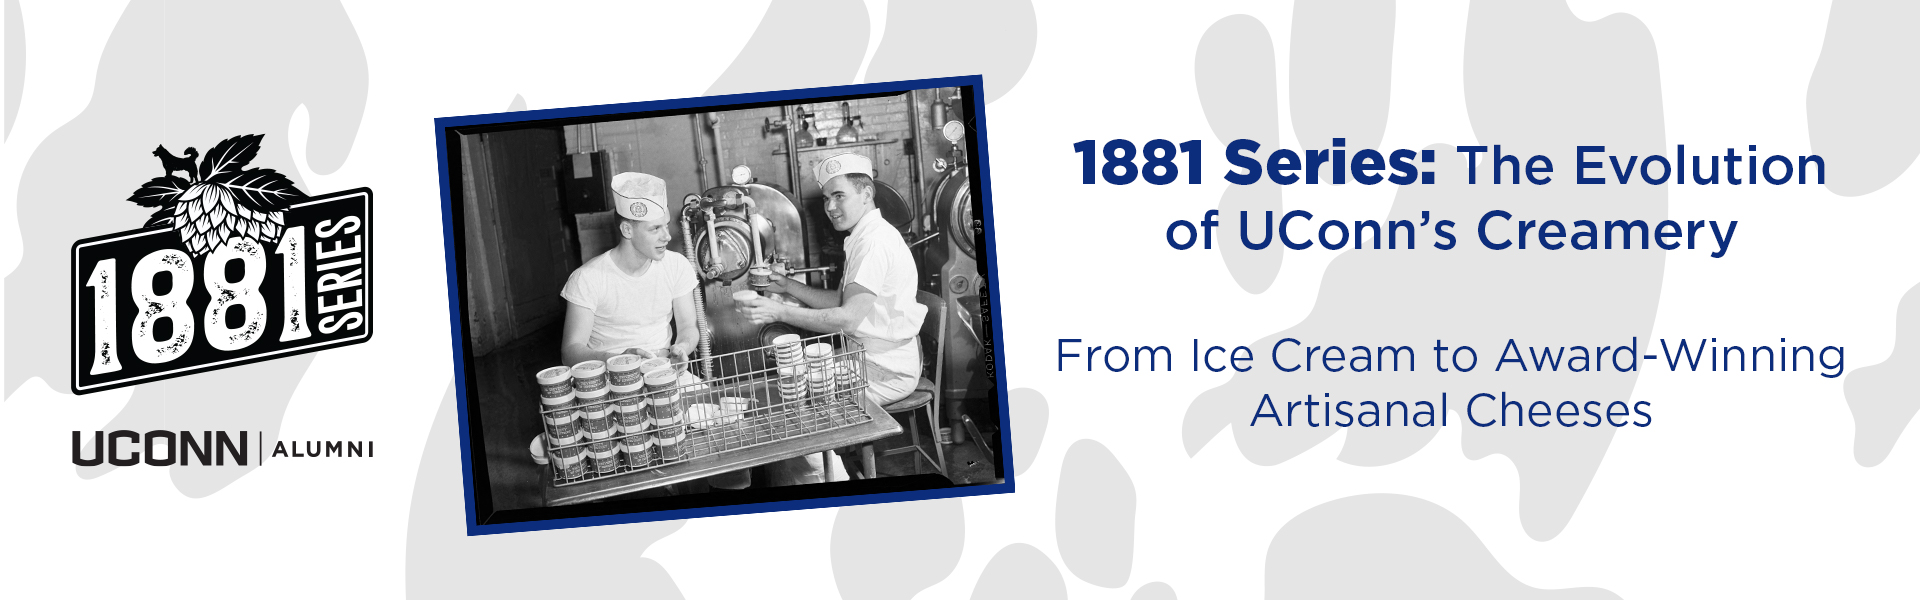 1881 Series: The Evolution of UConn's Creamery